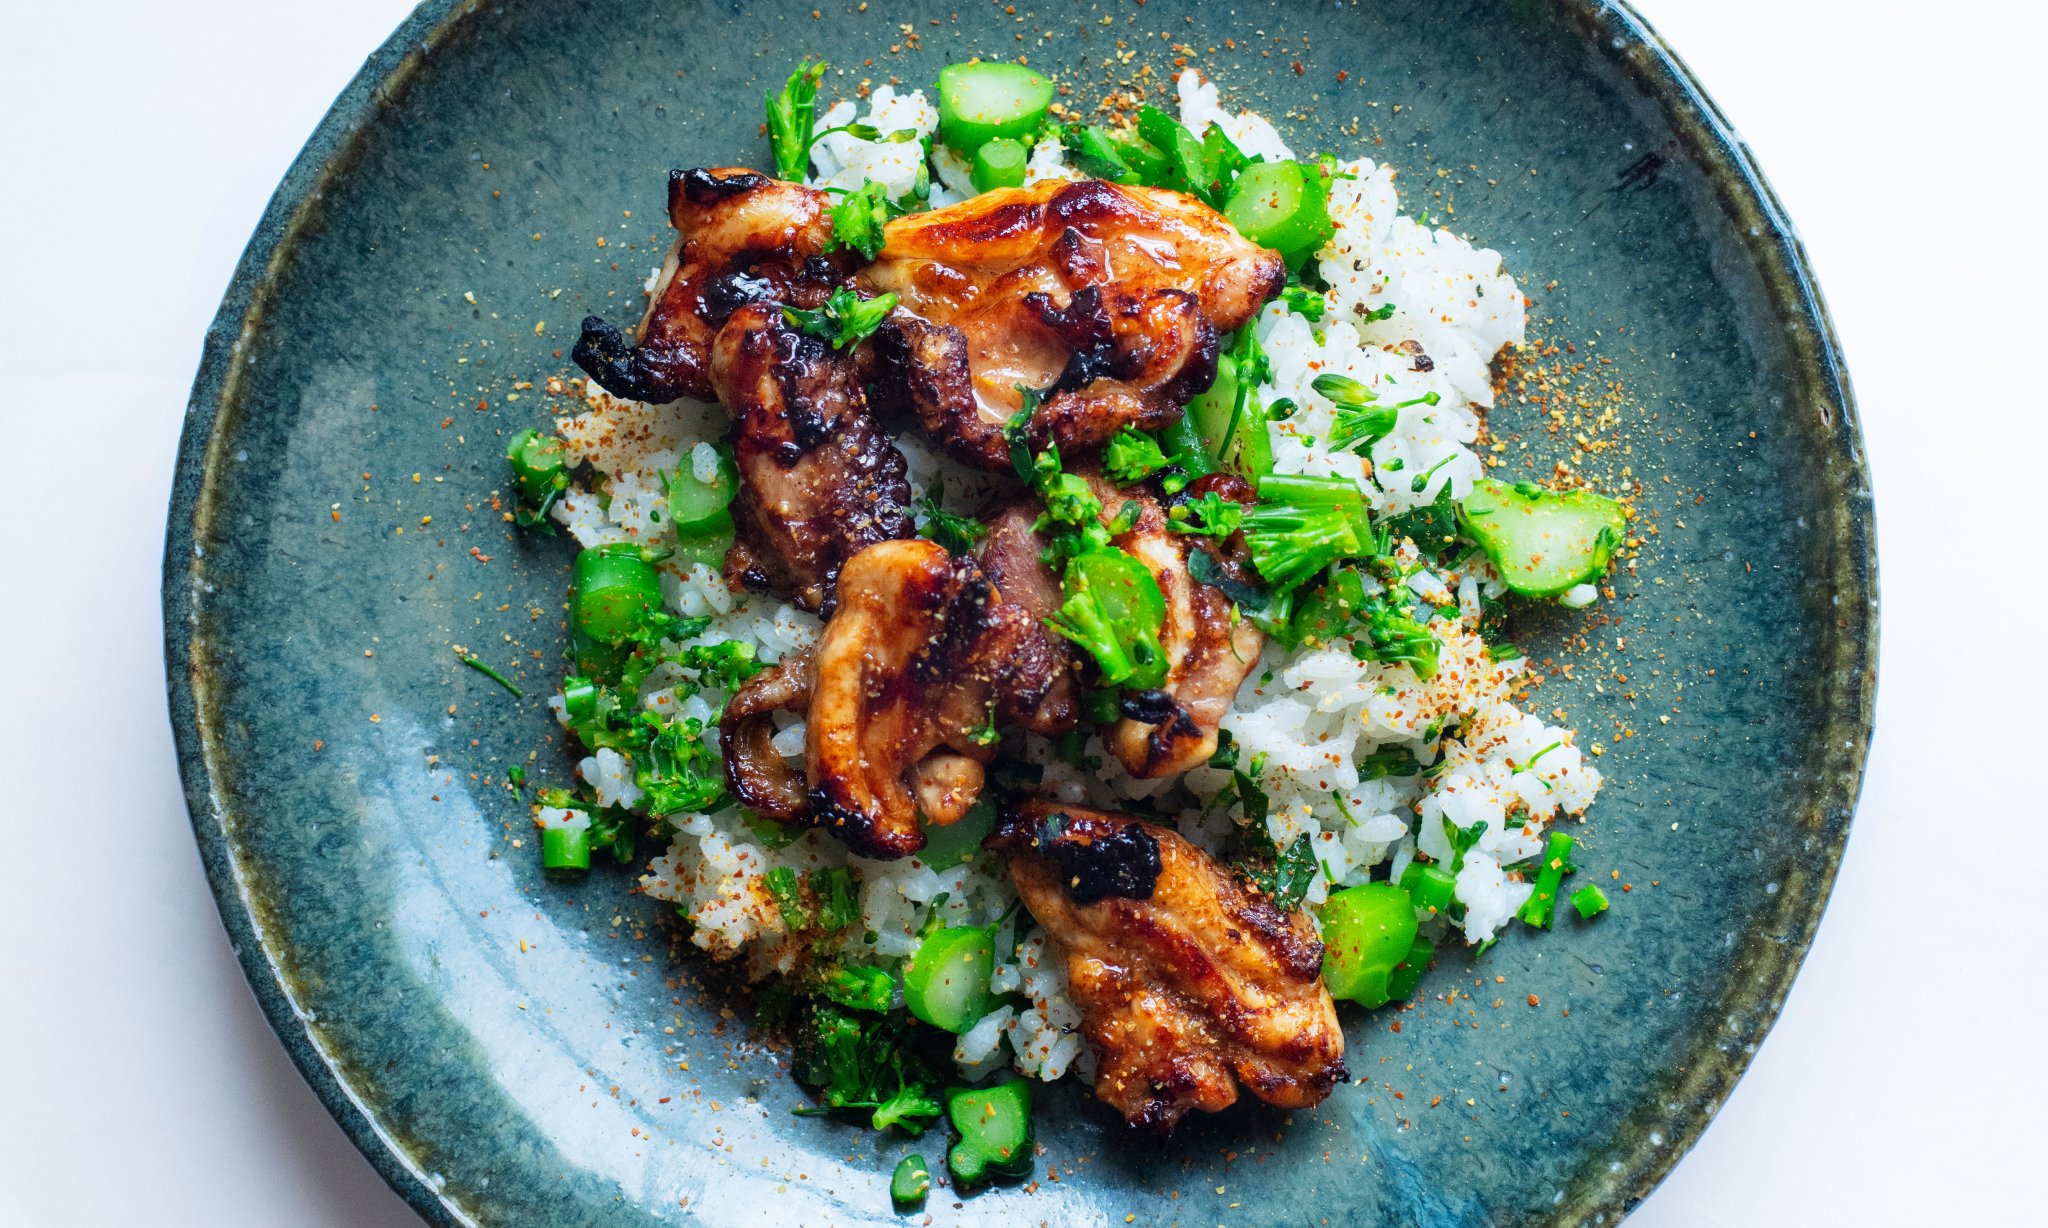 Nigel Slater’s recipe for yuzu chicken, broccoli and rice